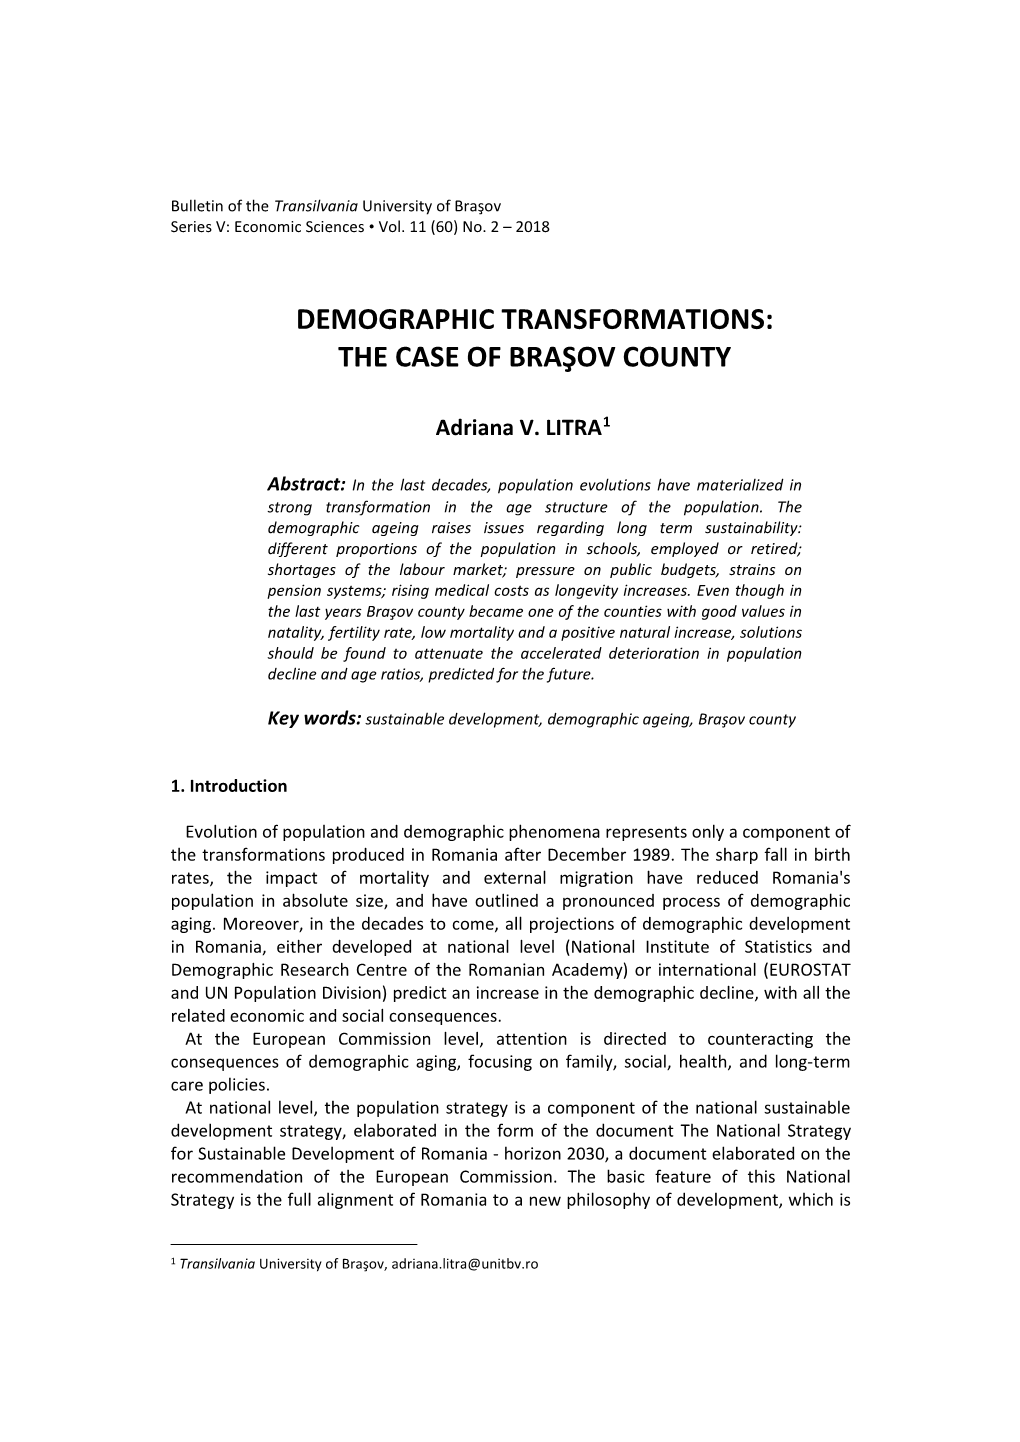 Demographic Transformations: the Case of Braşov County